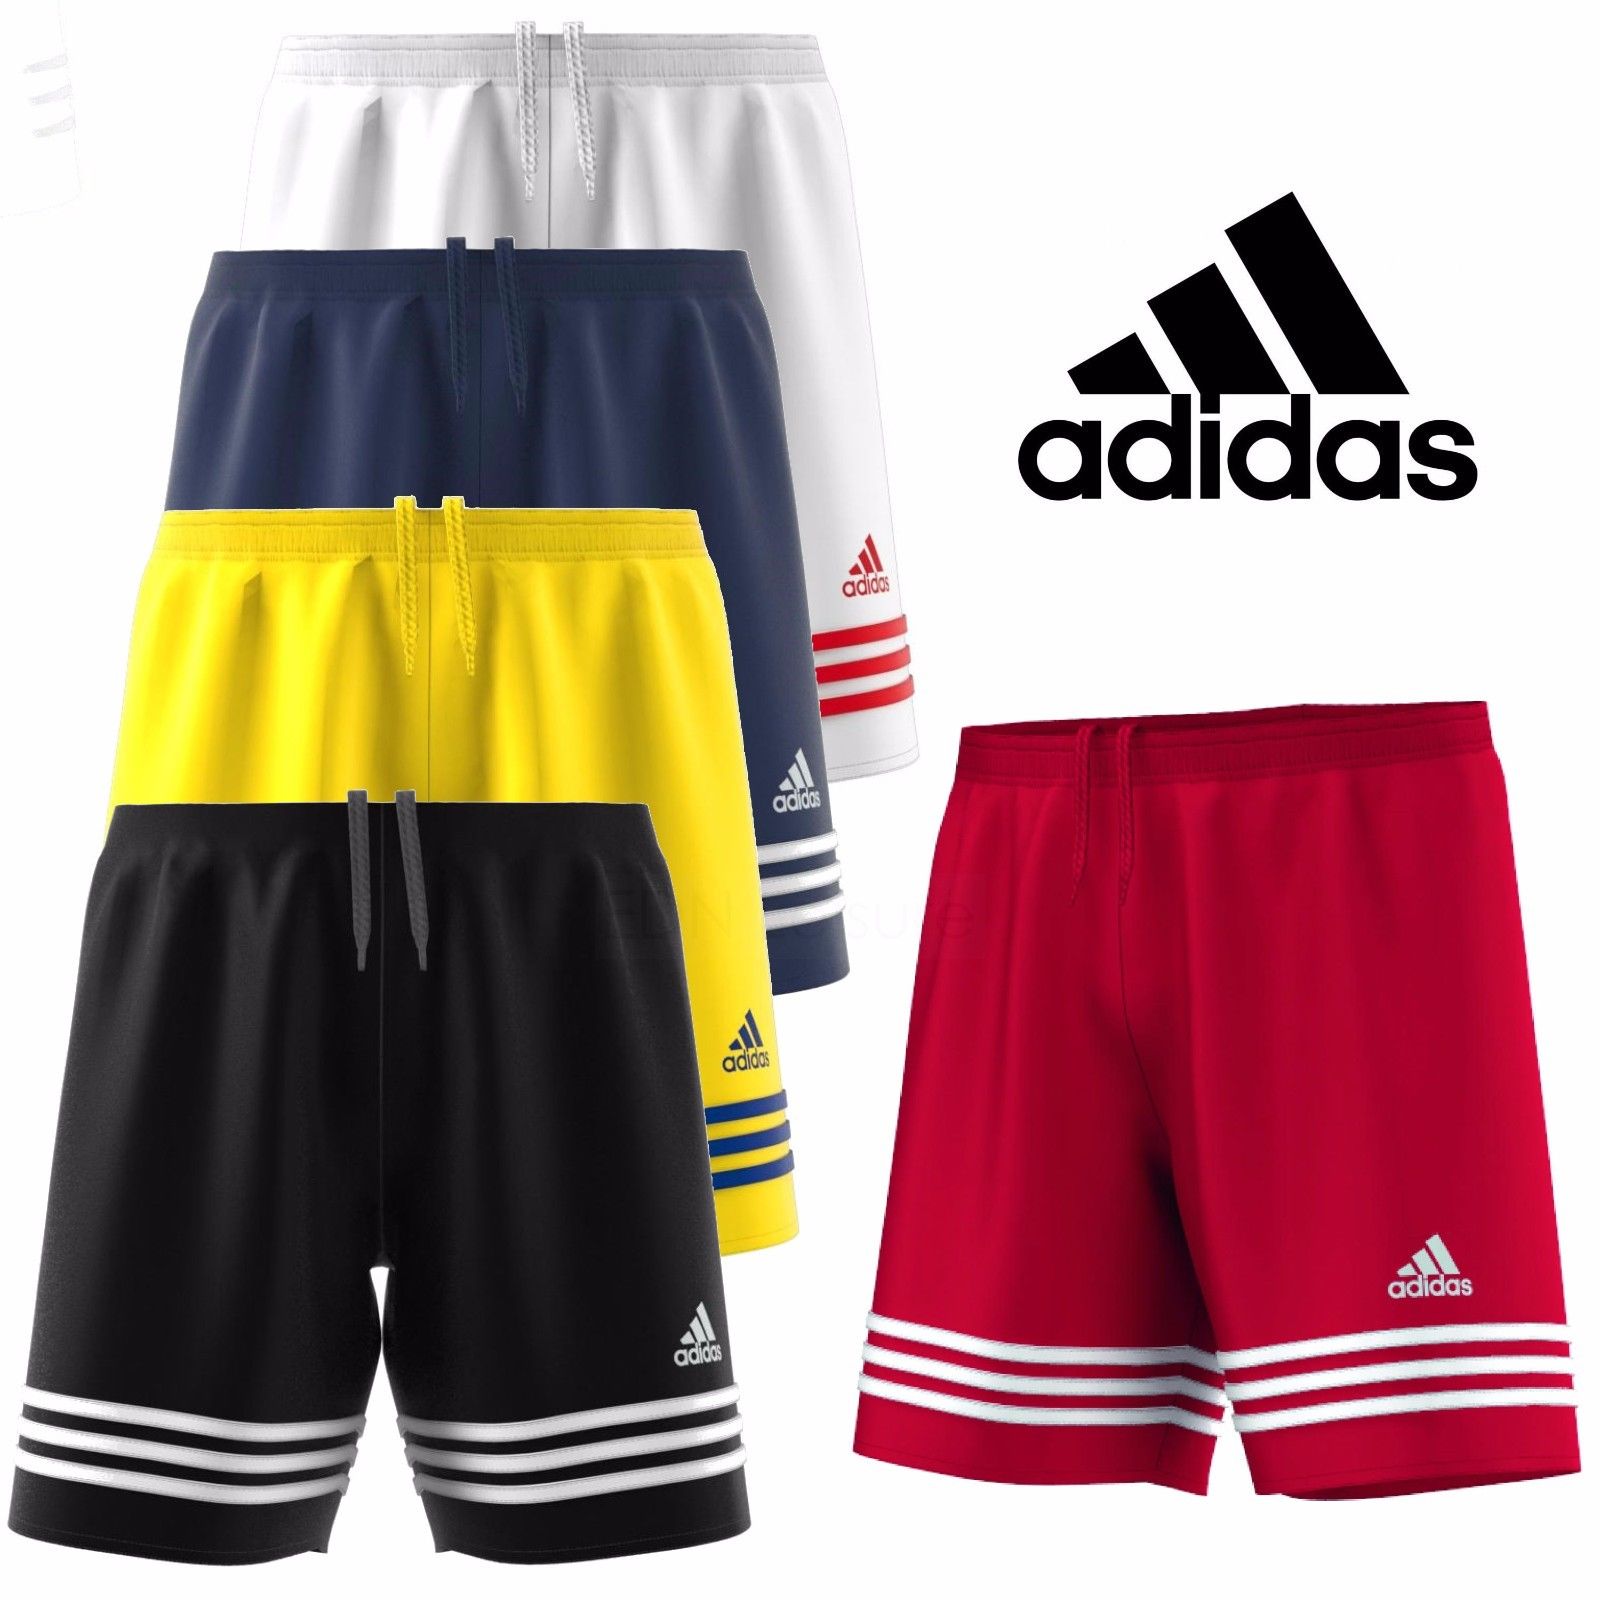 Adidas Mens Shorts Sports Training Entrada Football Climalite Gym S M L XL XXL